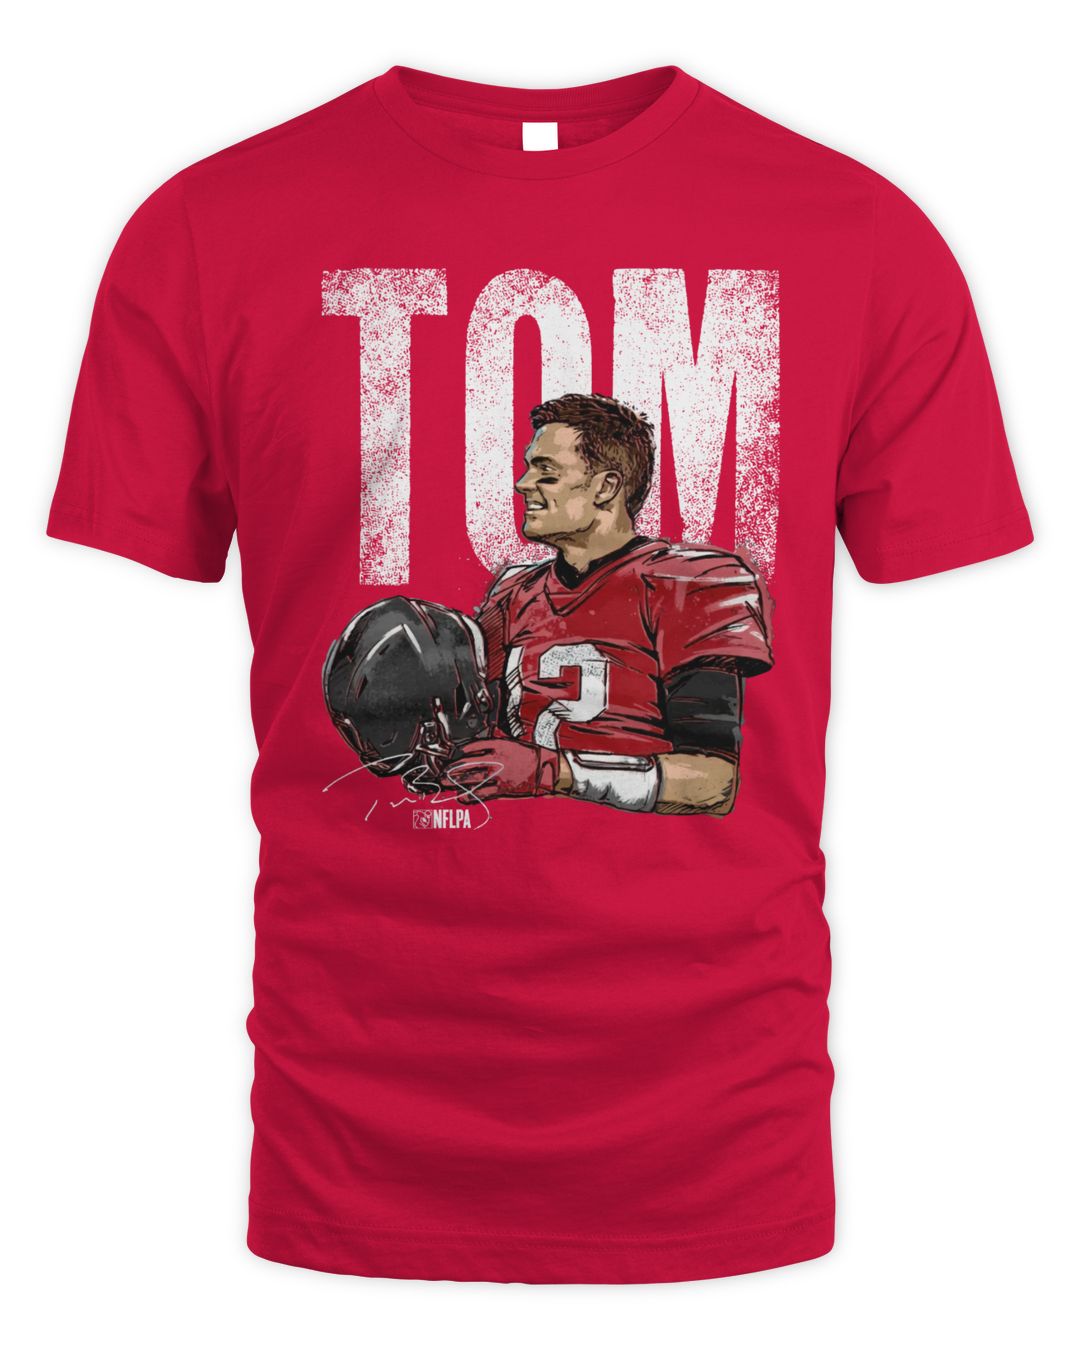 Tom Brady Merch Paint Shirt